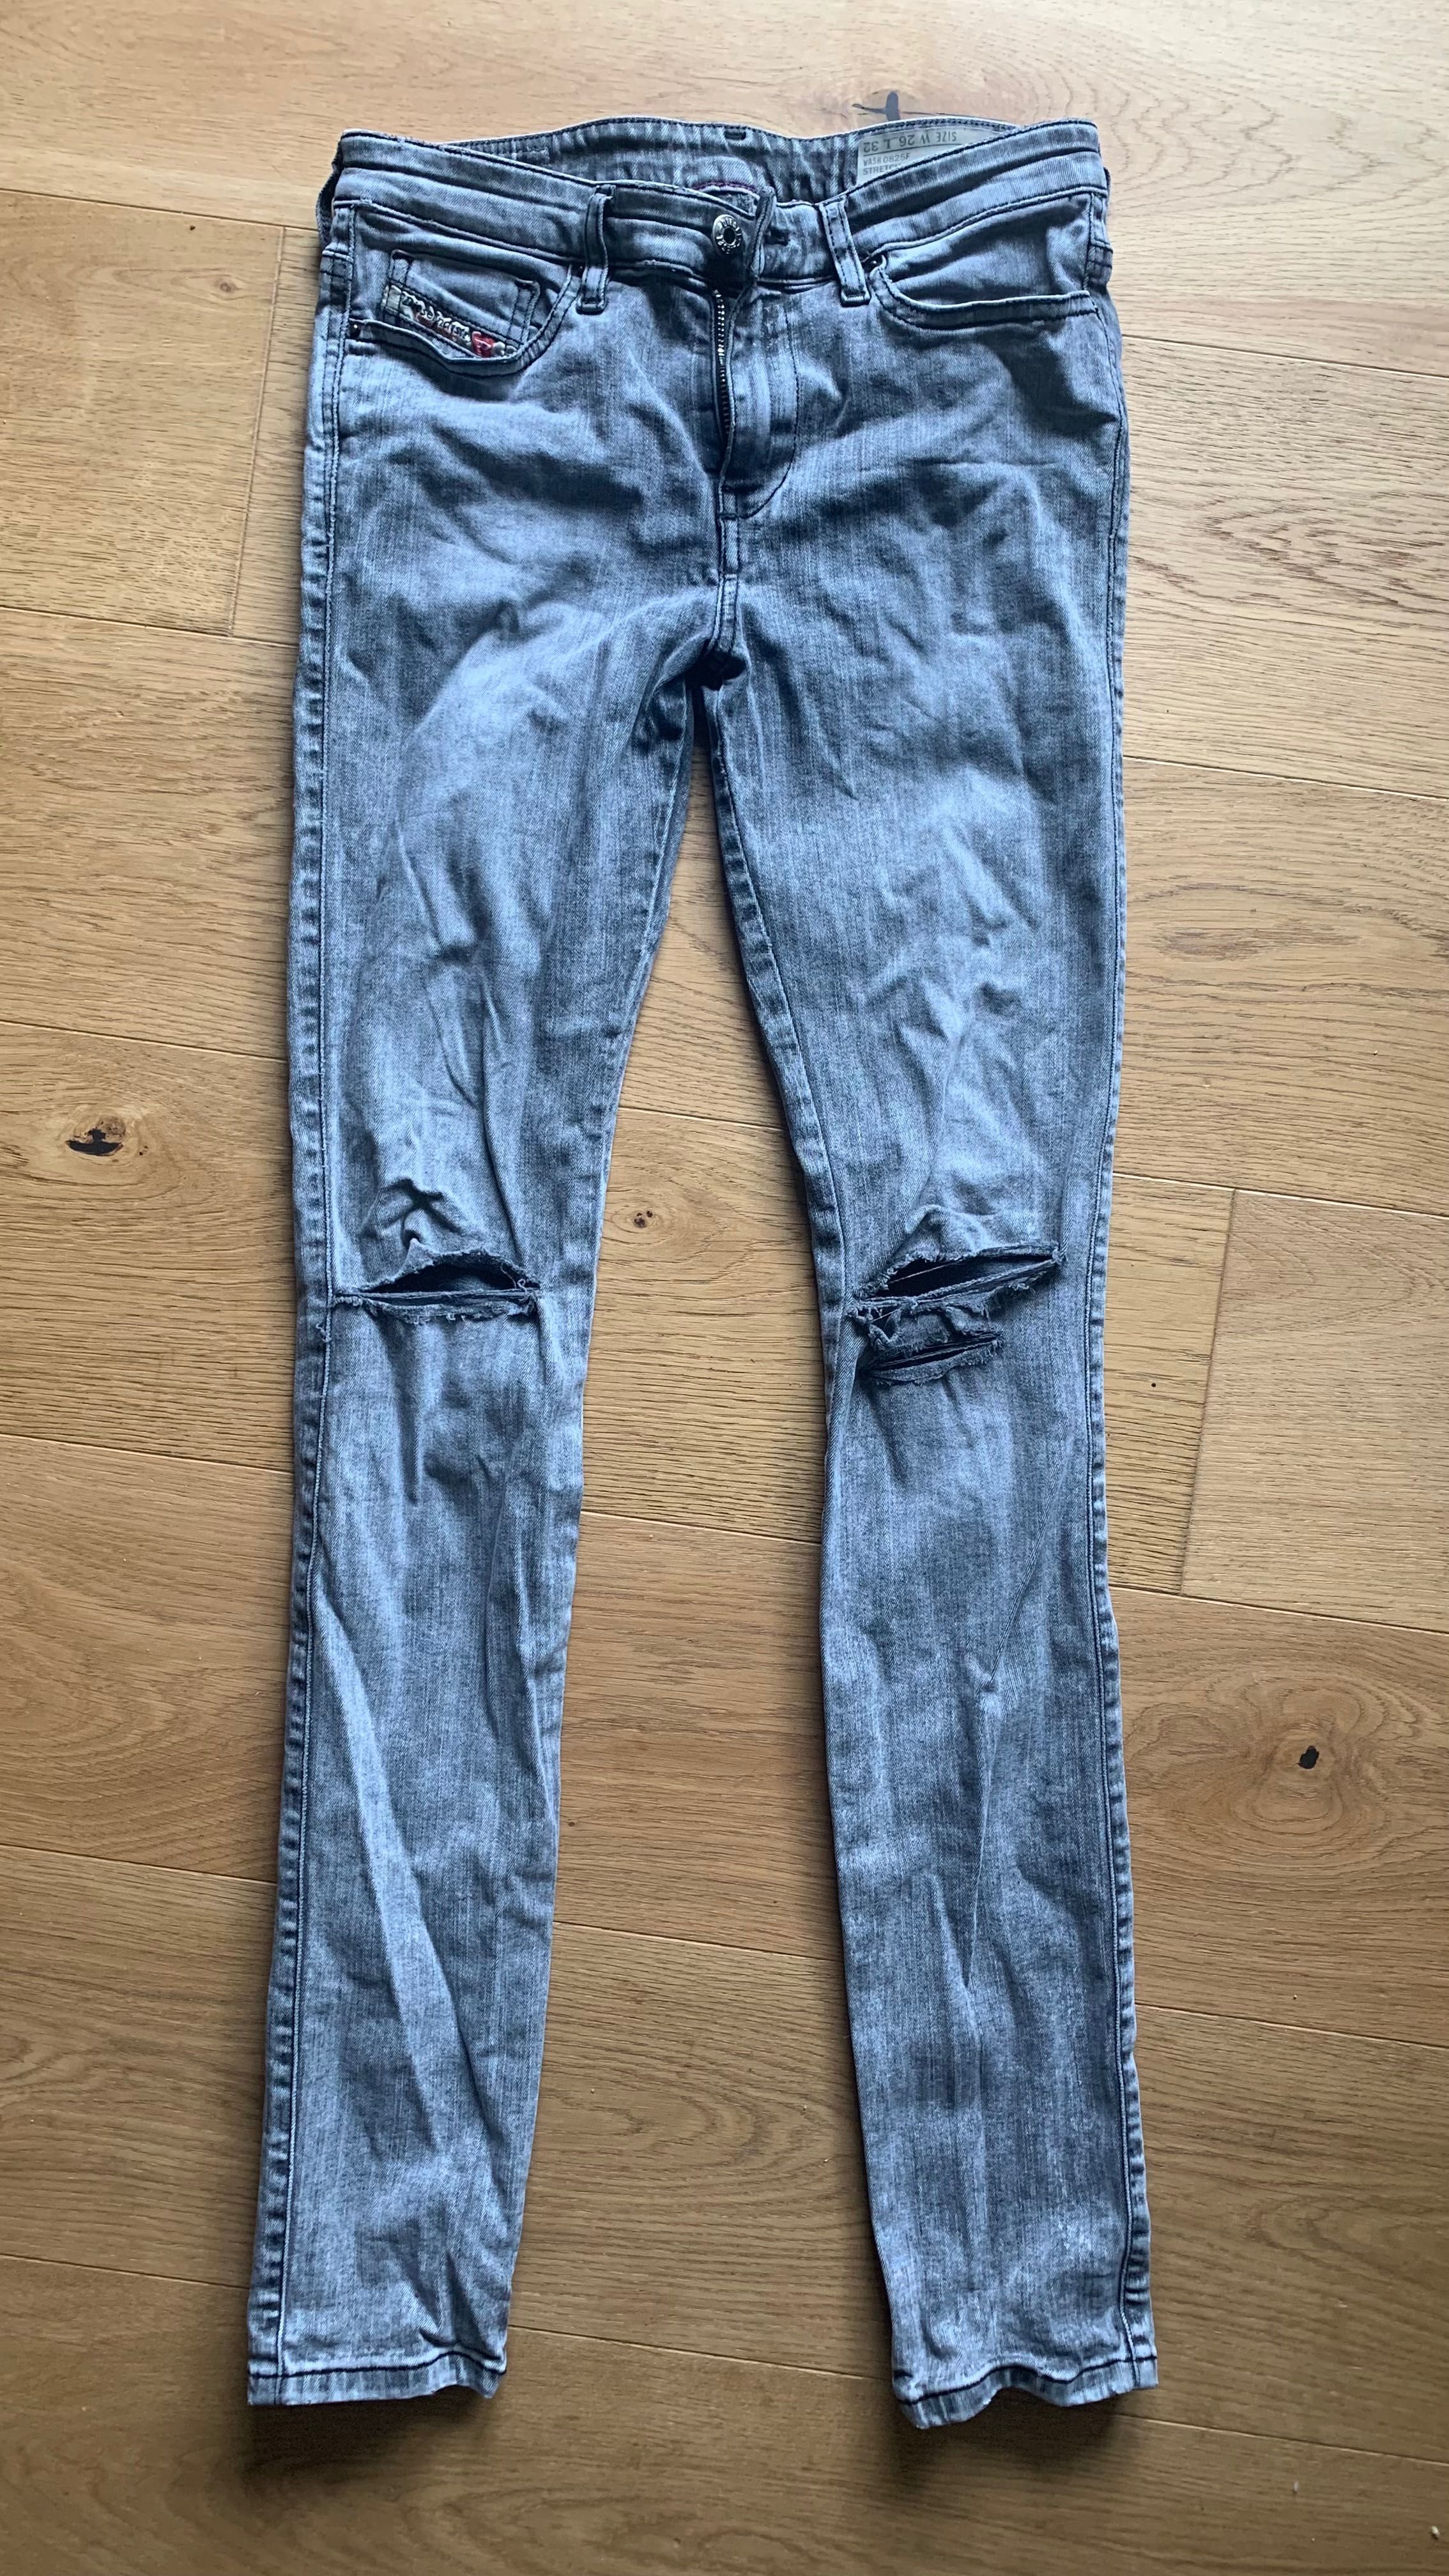 Spodnie damskie Diesel Industry 26/32 jeansy rurki